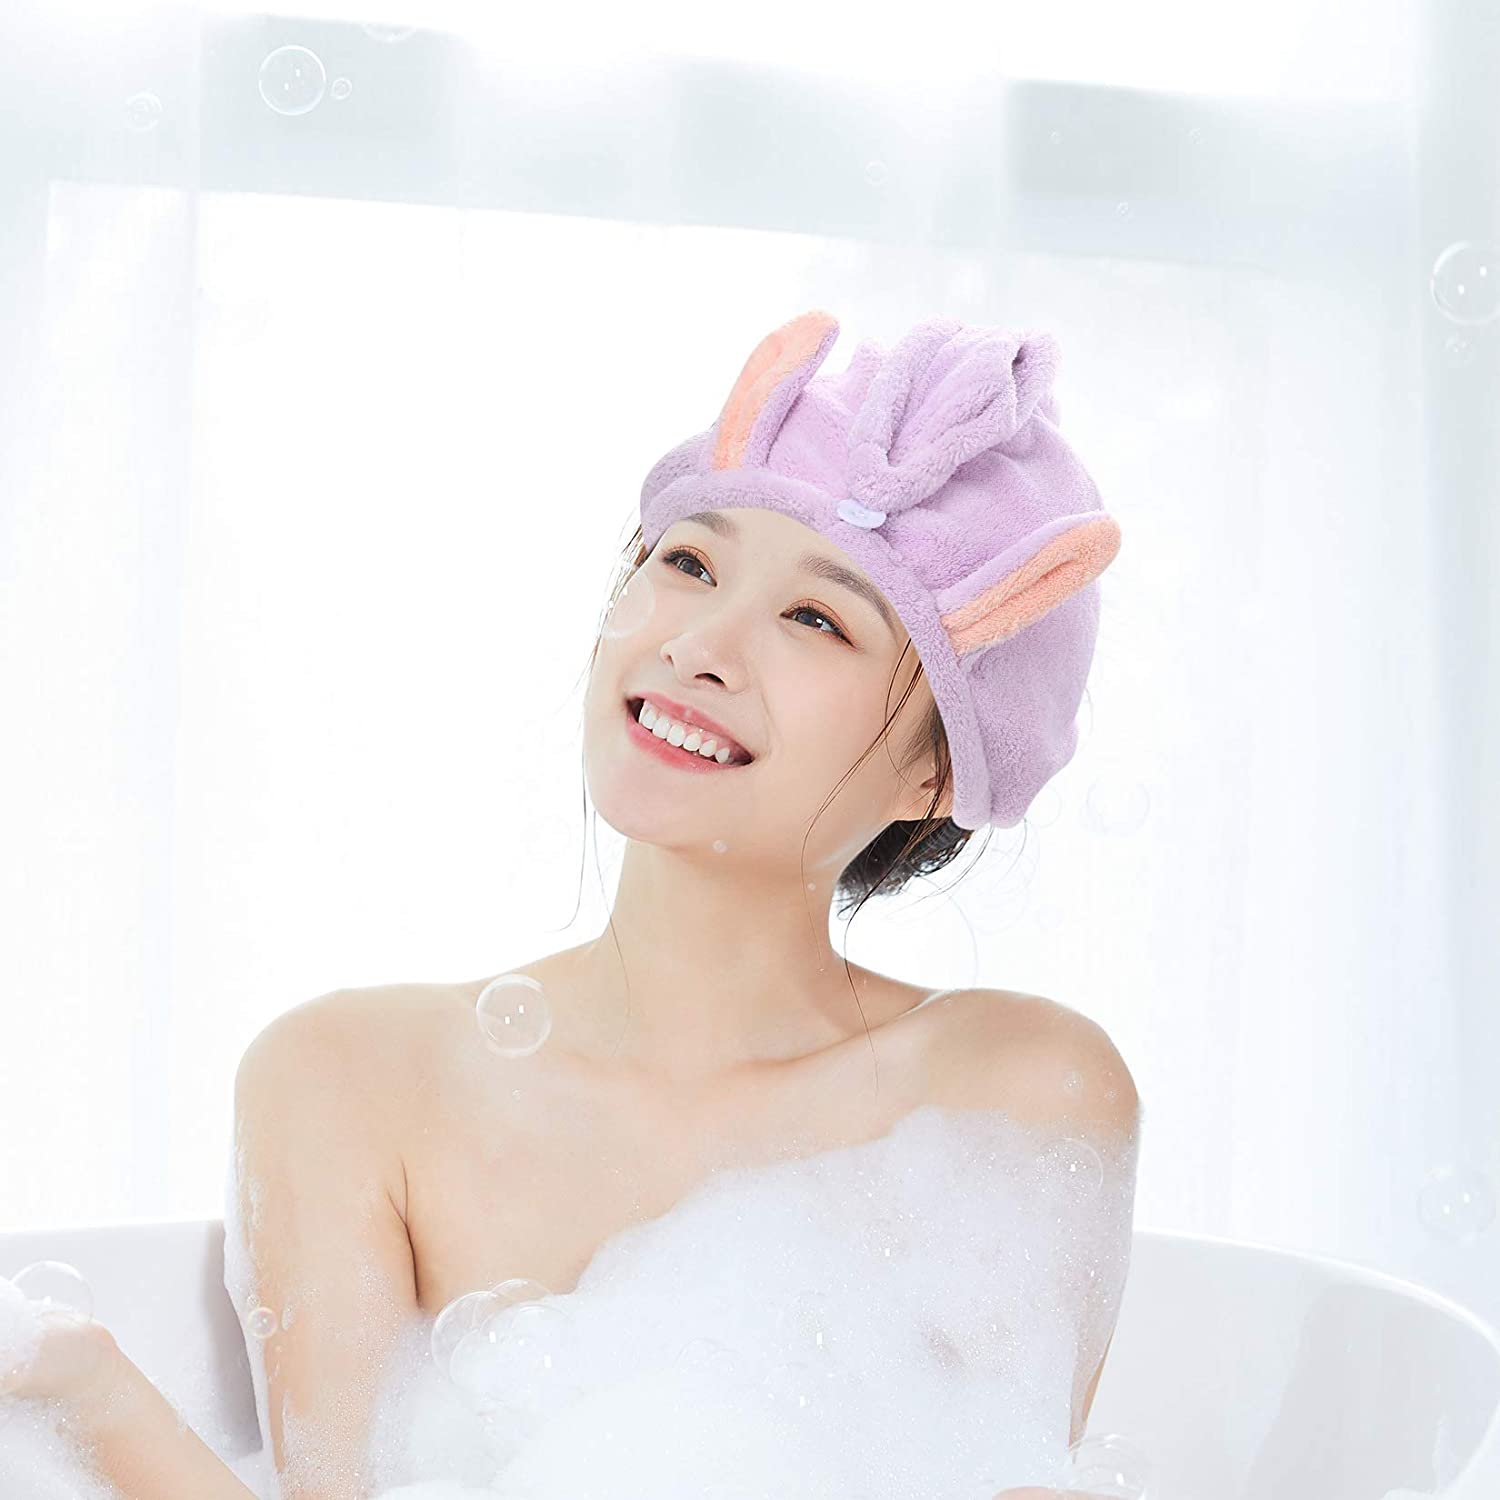 Yibaijia Microfiber Hair Towel Wrap Turban Set for Kids, Women - Wet, Long, Thick Hair (2 Pack, Pink & Purple) 5